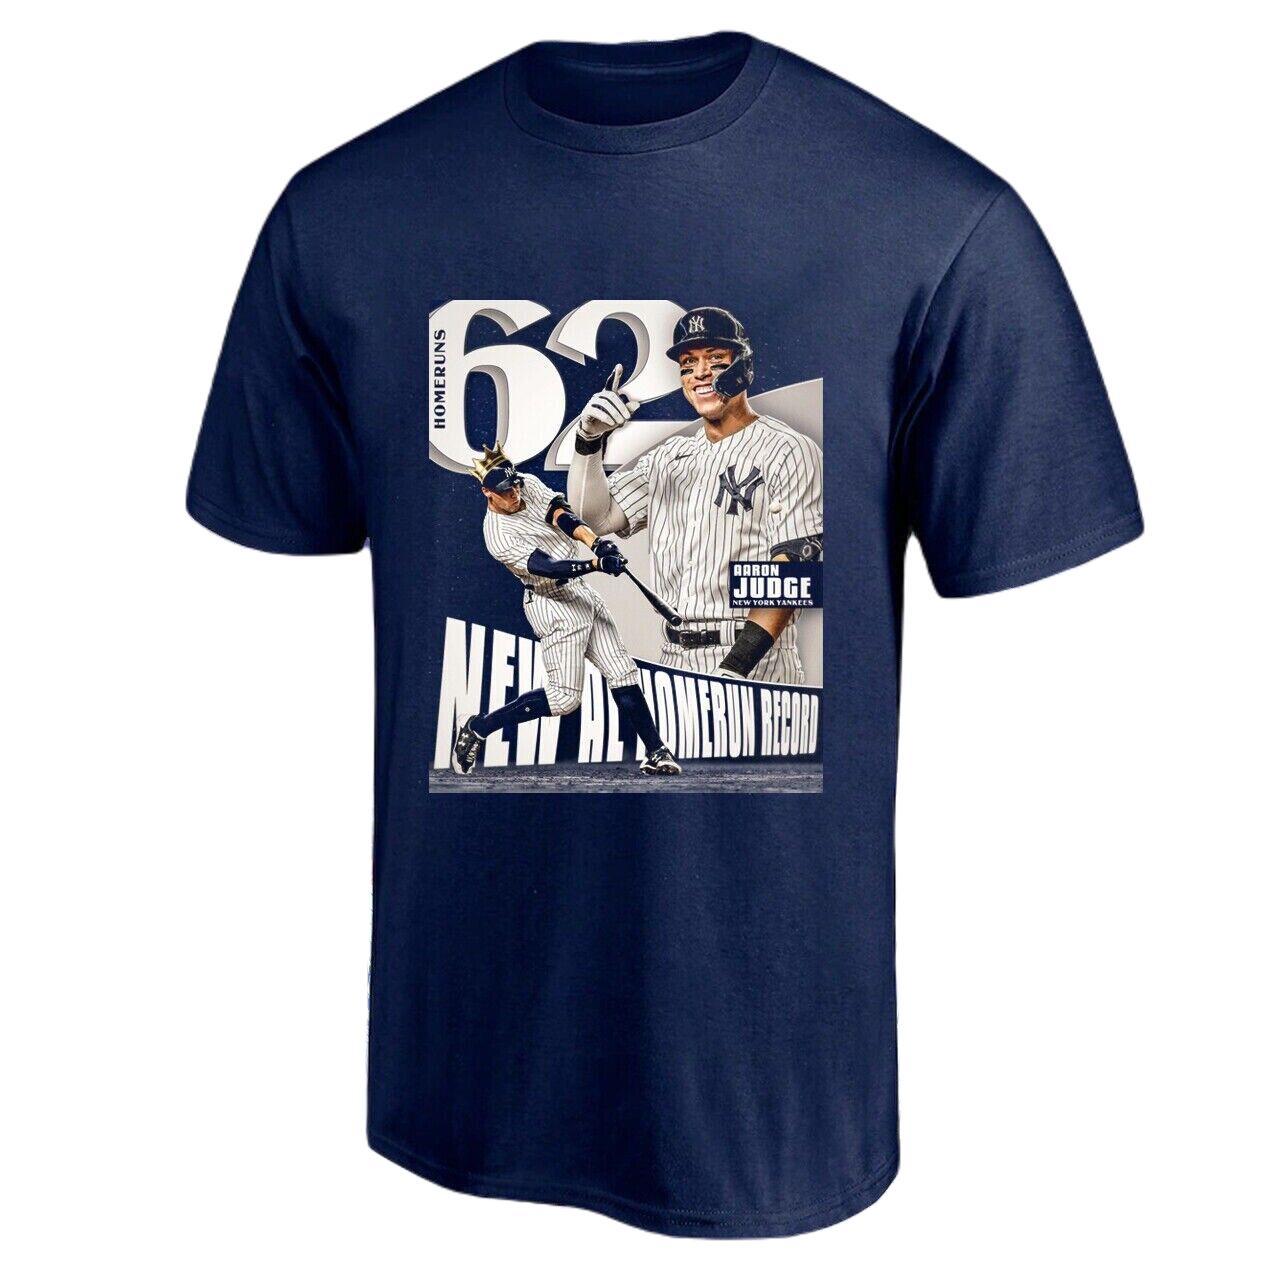 New York Yankees Shirt, Women Yankees TShirt, Gifts For Yankees